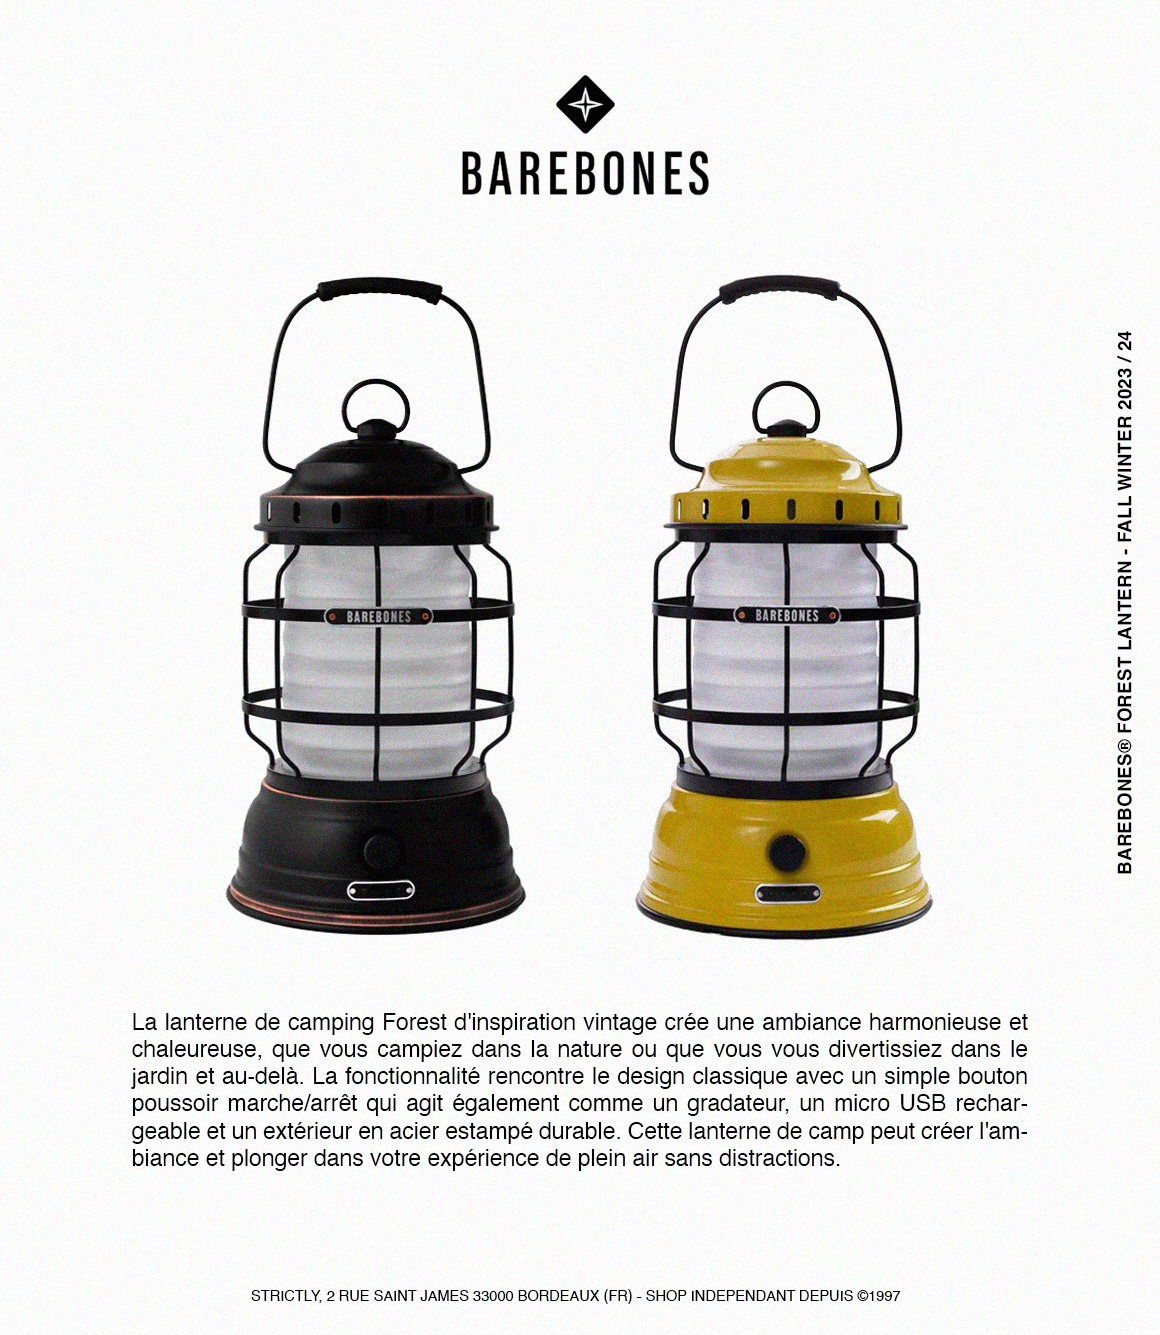 Barebones - Forest Lantern - Red